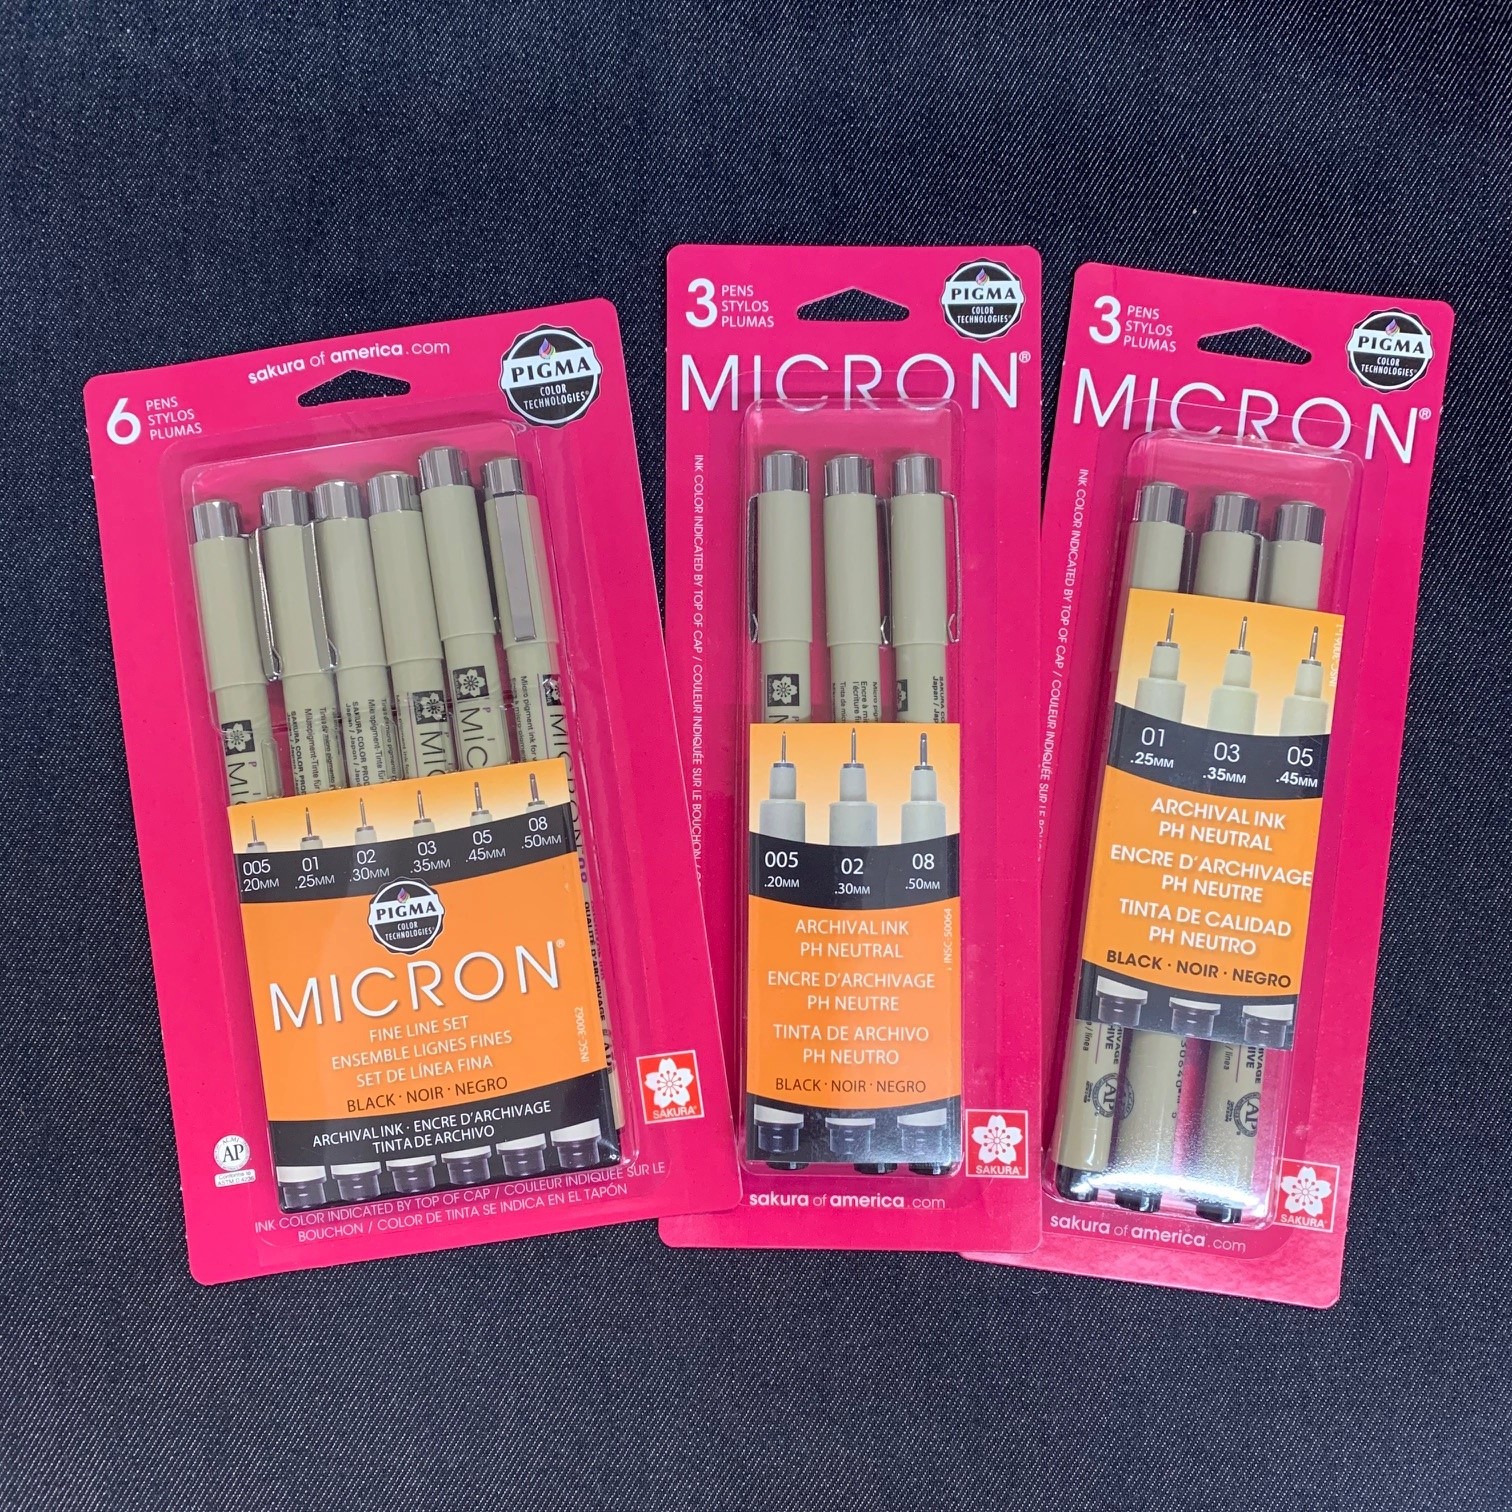 Pigma Micron Pen PN - Black, 3 Pack